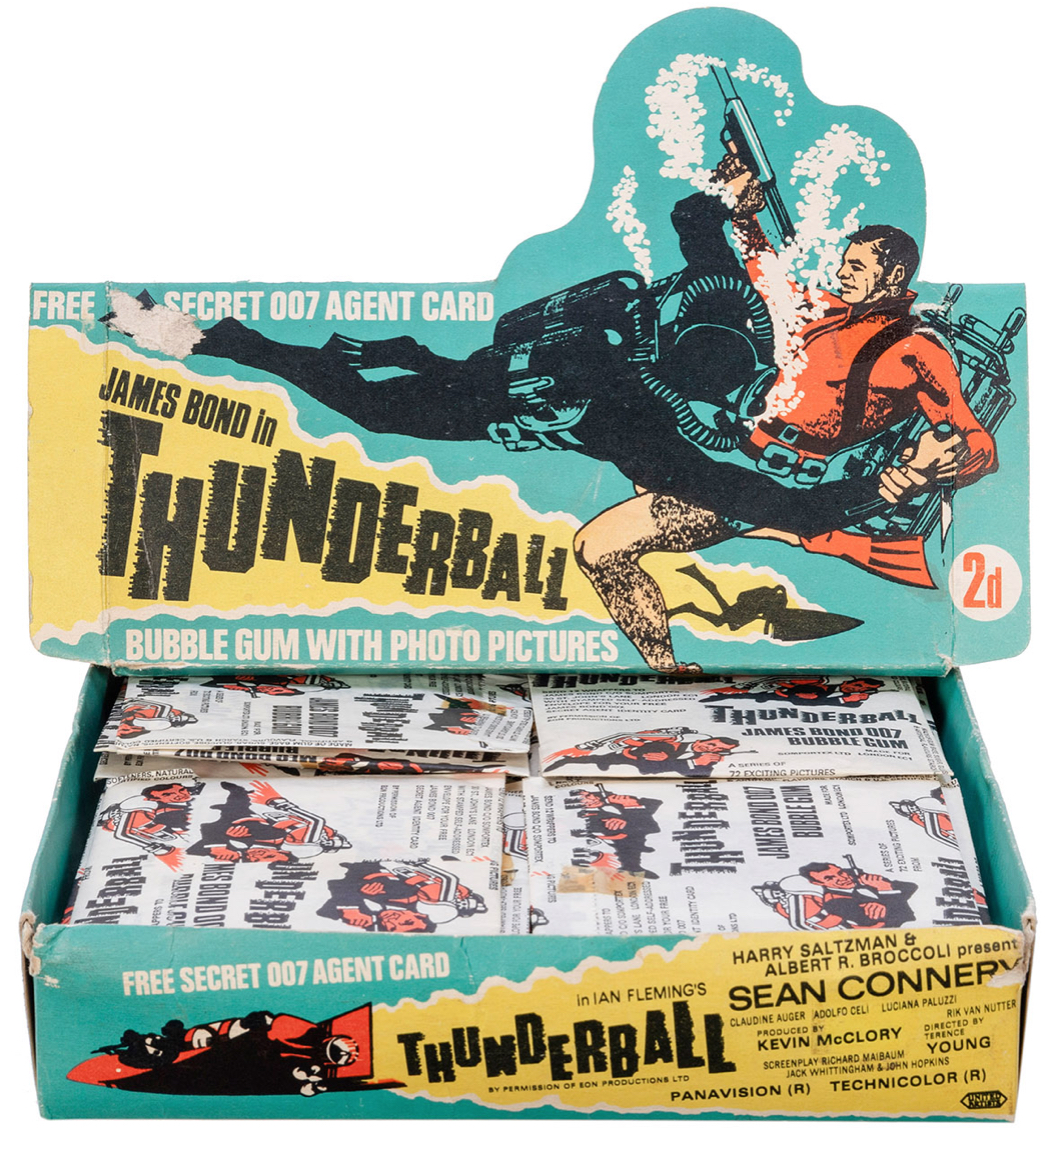 James Bond Thunderball bubble gum and trading card packs, $4,800